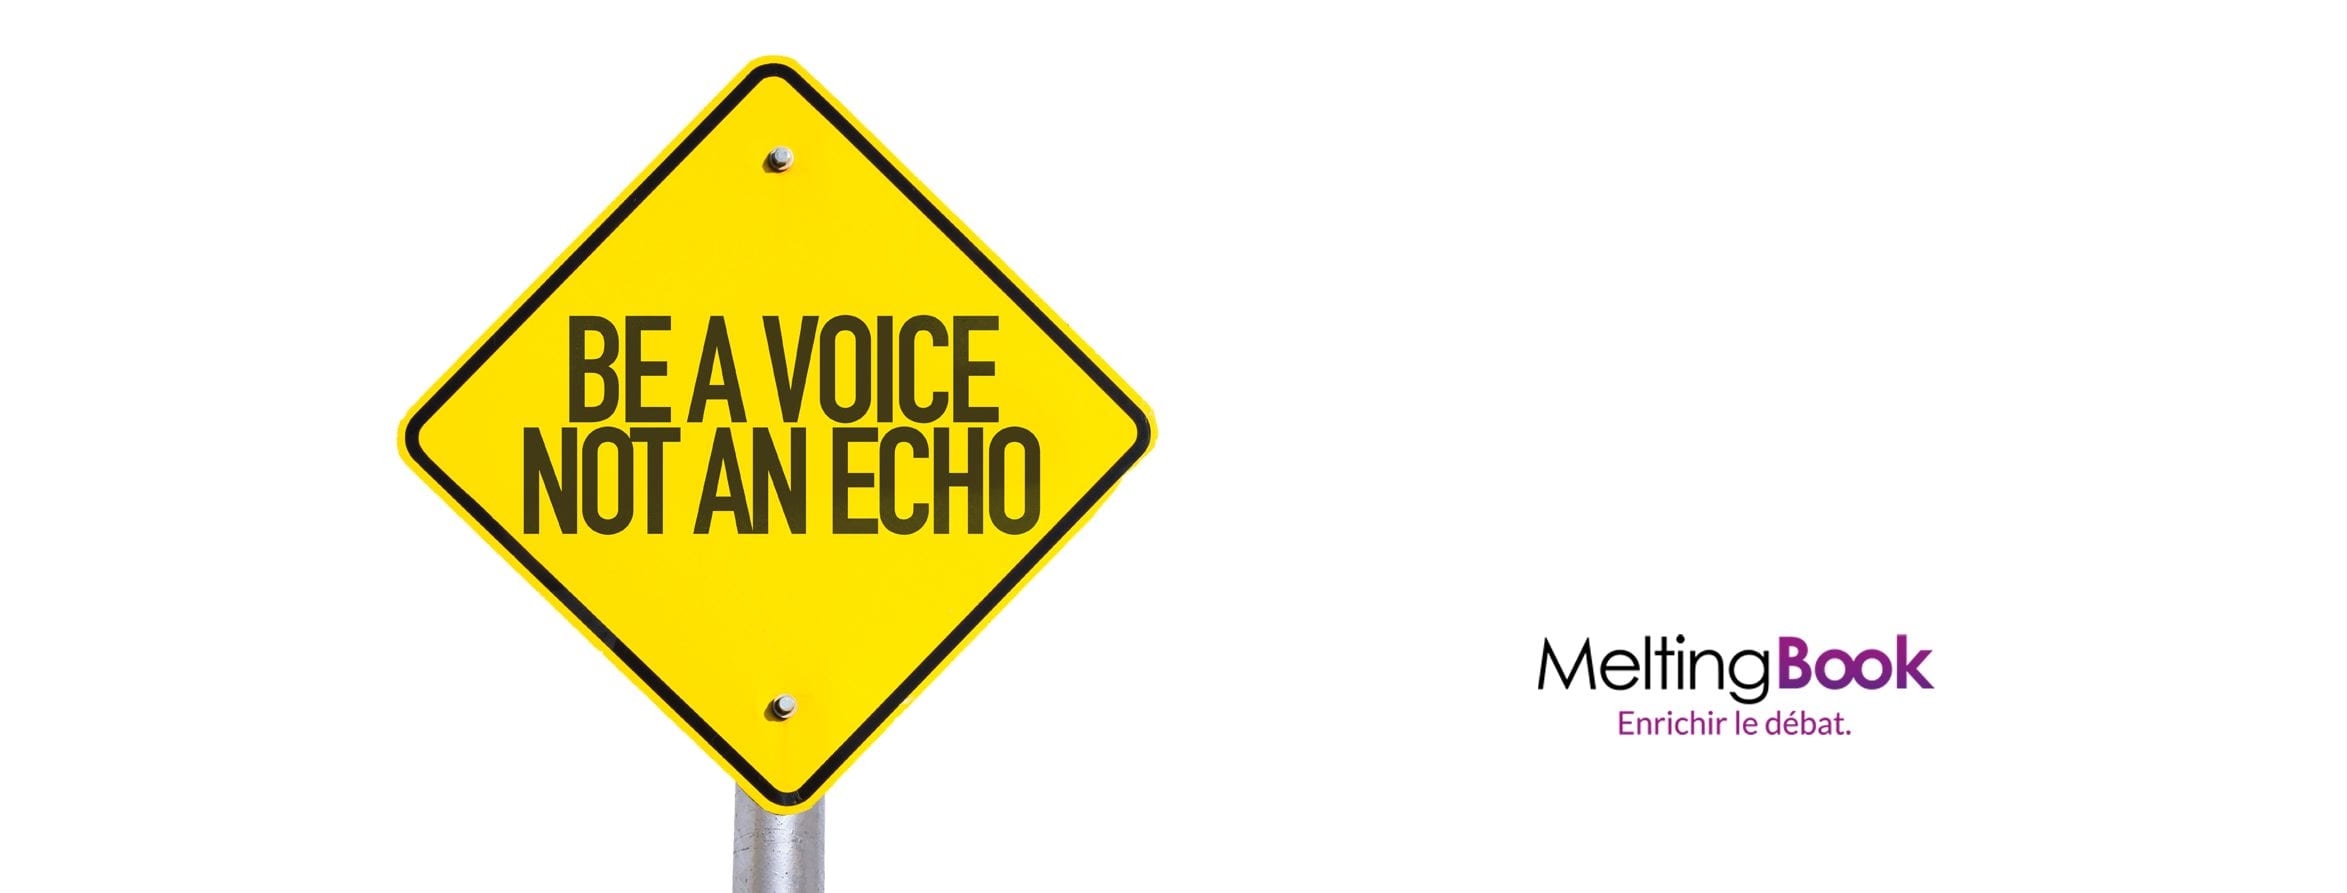 Edito Une Voix Pas Un Echo Meltingbook